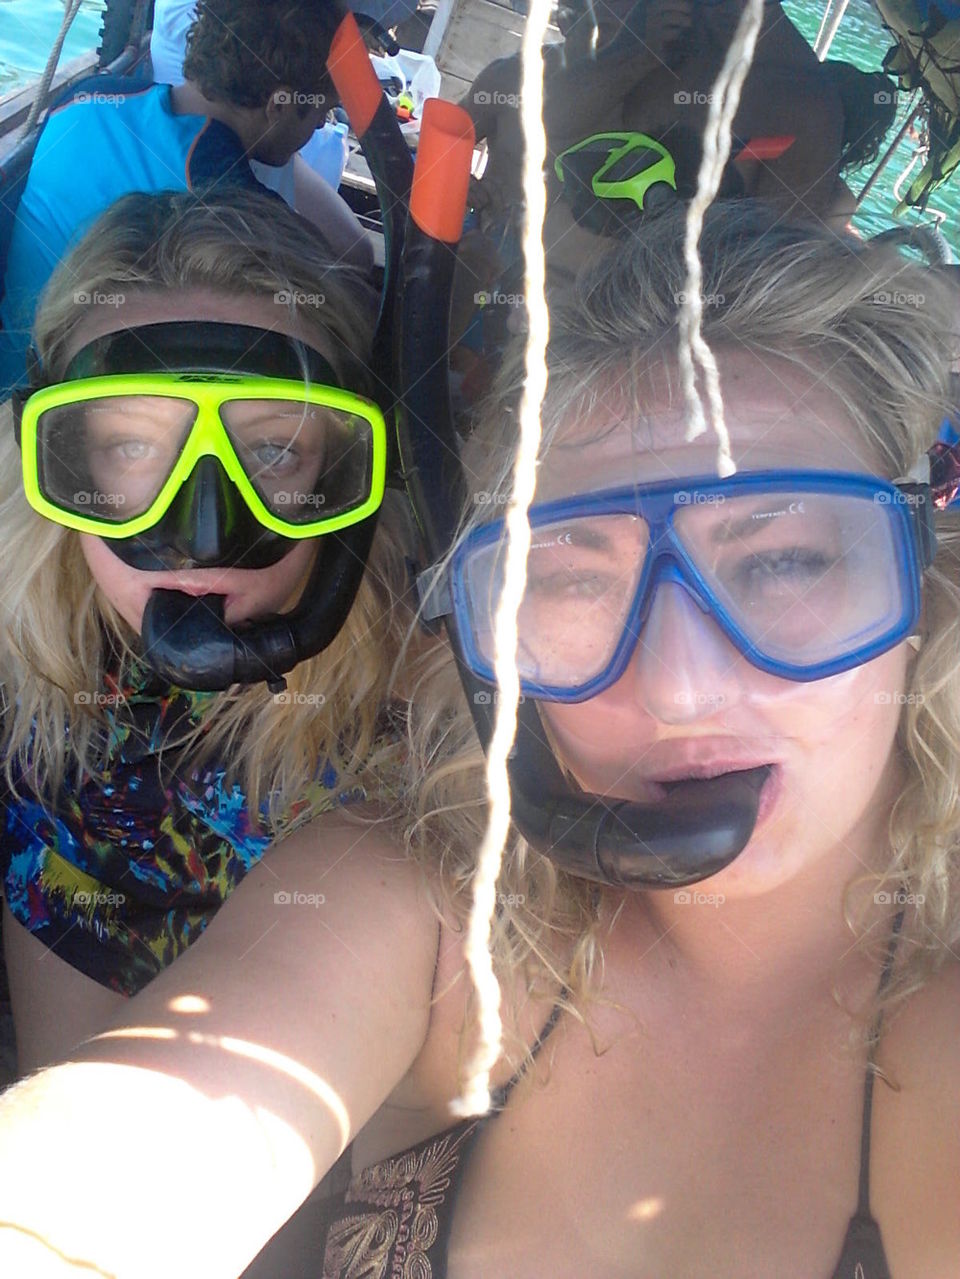 snorkeling